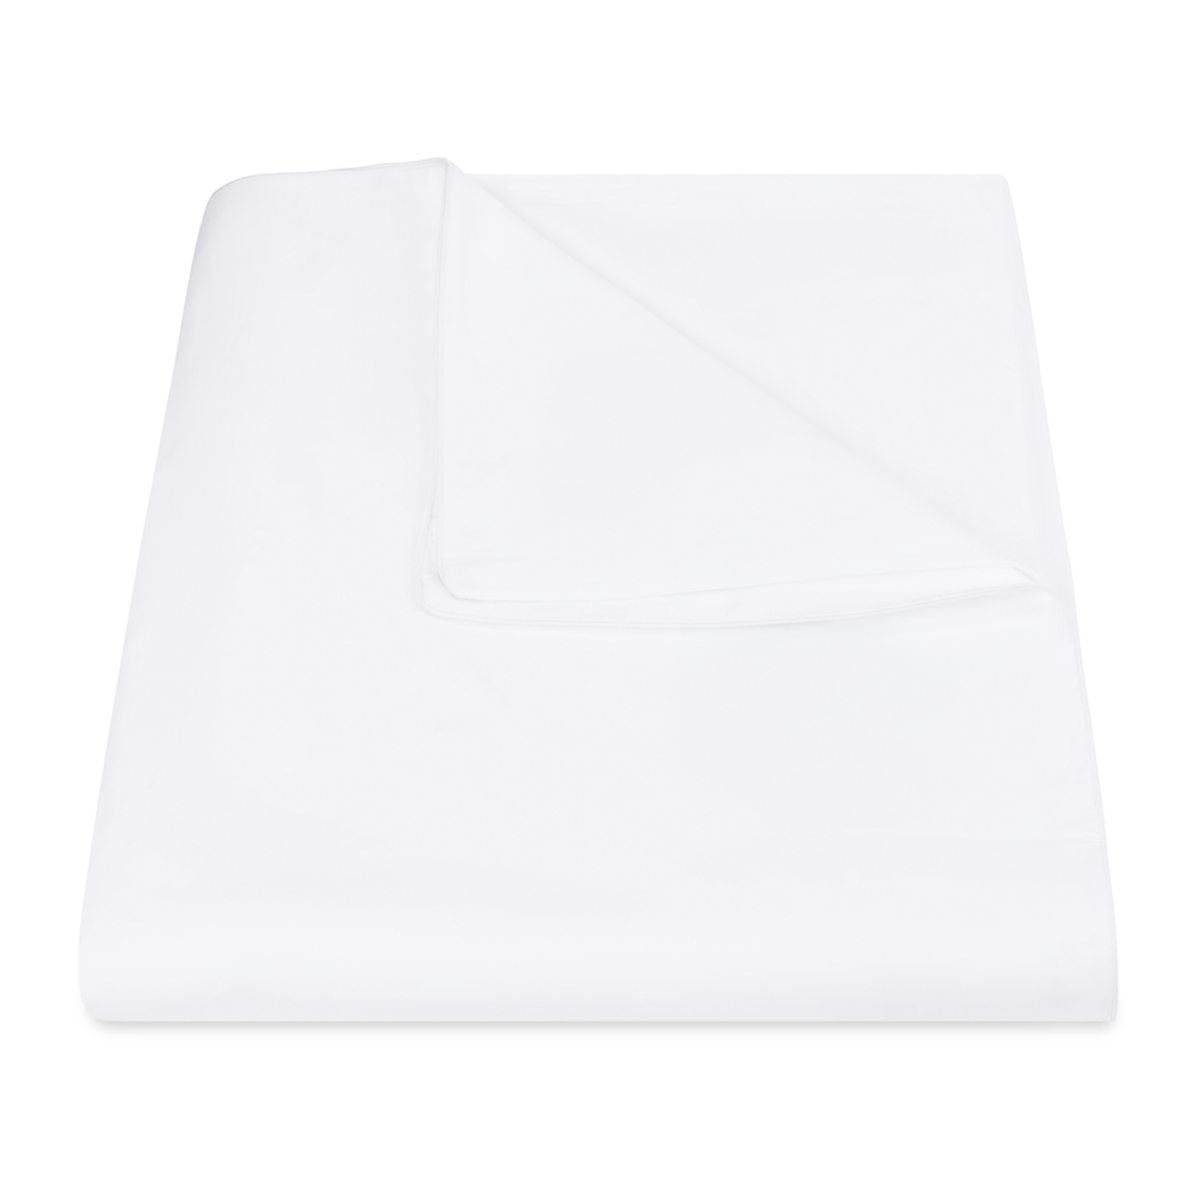 Duvet Cover of Matouk Bryant Bedding in White Color